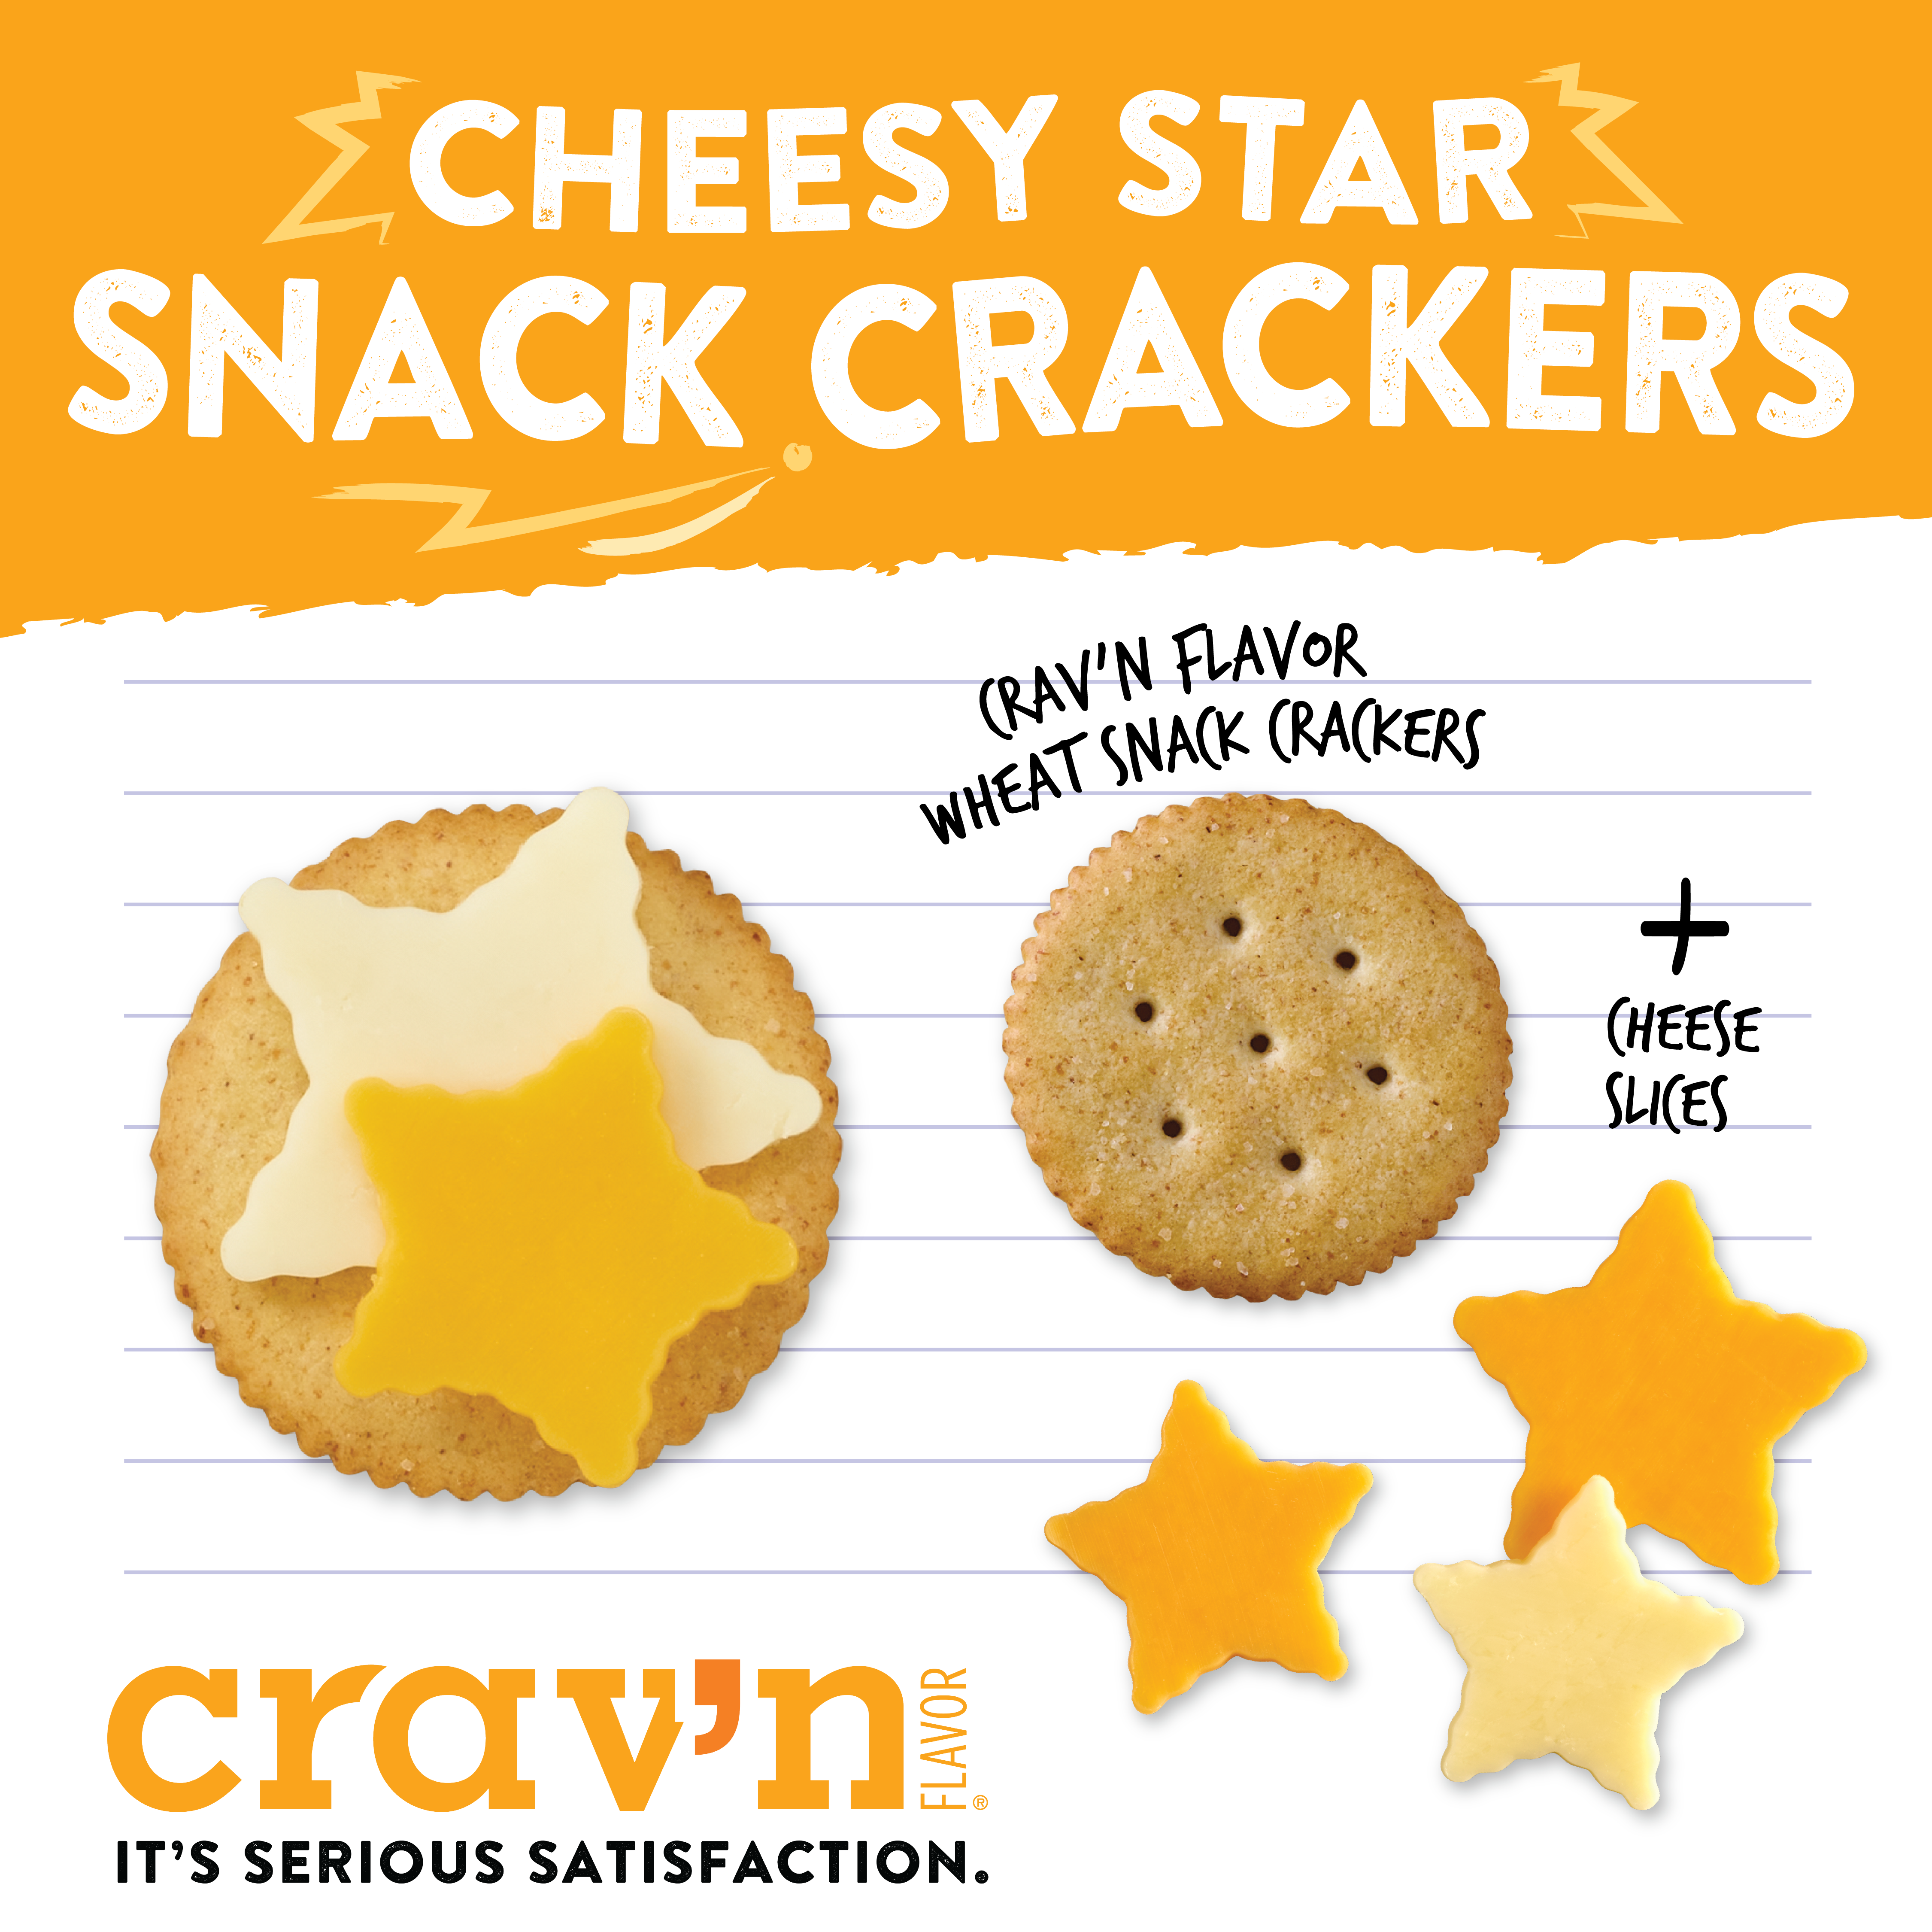 Cheesy Star Snack Crackers